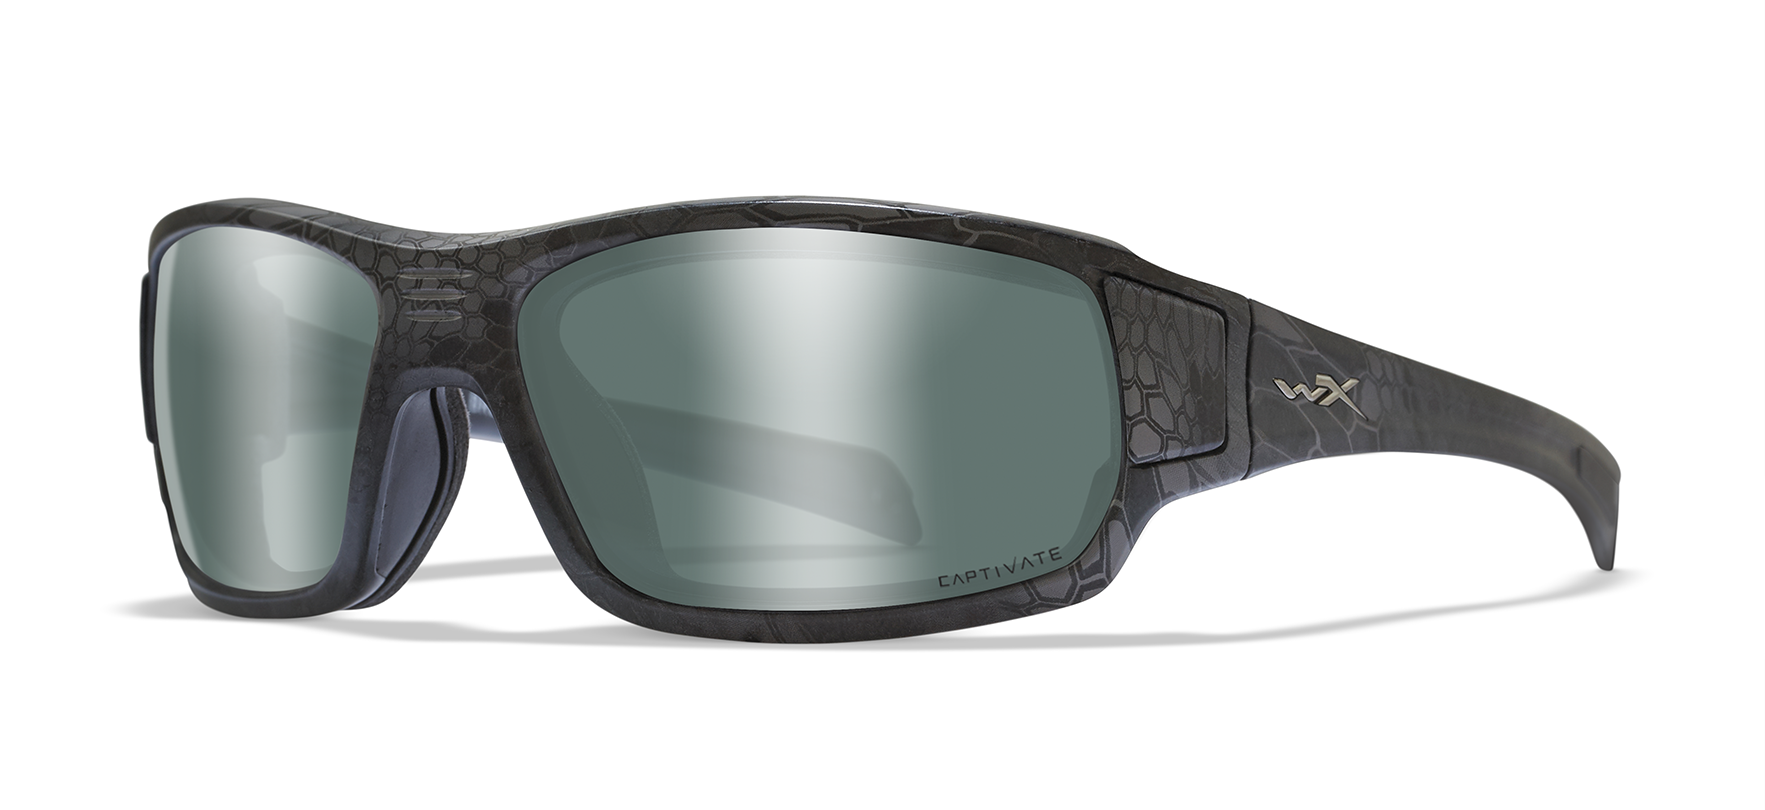 wiley x breach sunglasses with captivate platinum flash lenses